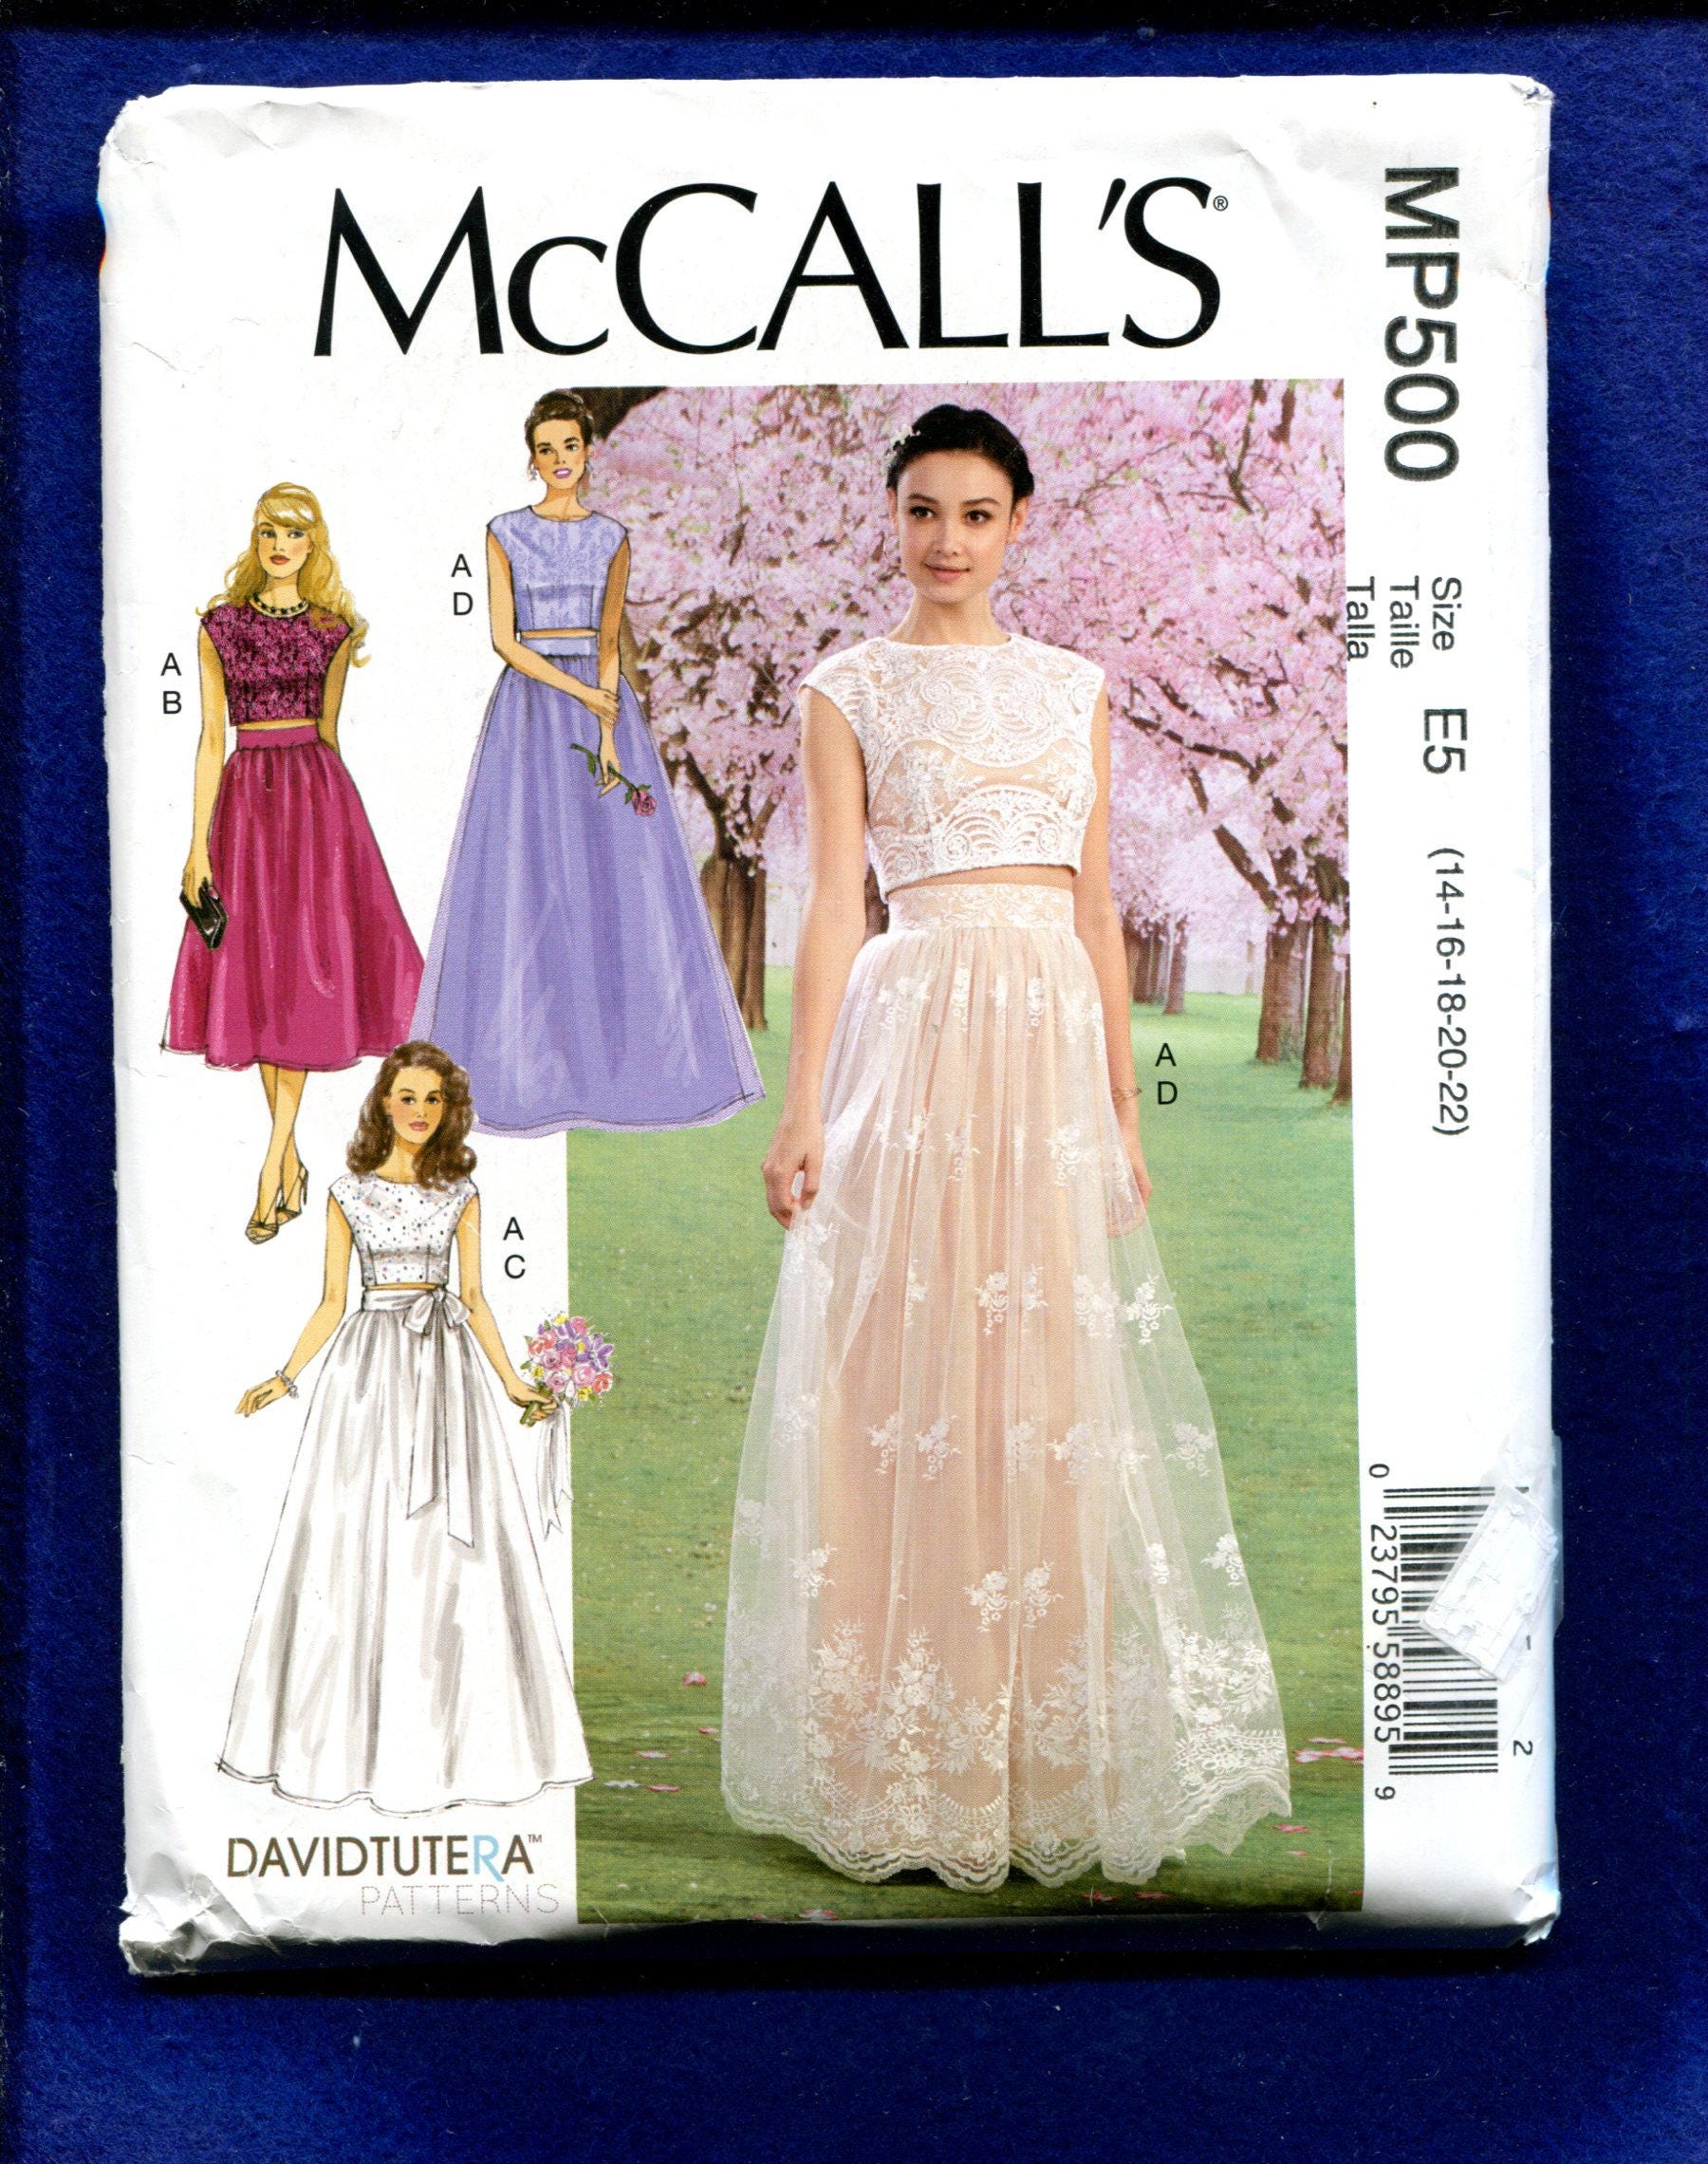 McCalls 500 David falda de boda crop top - España